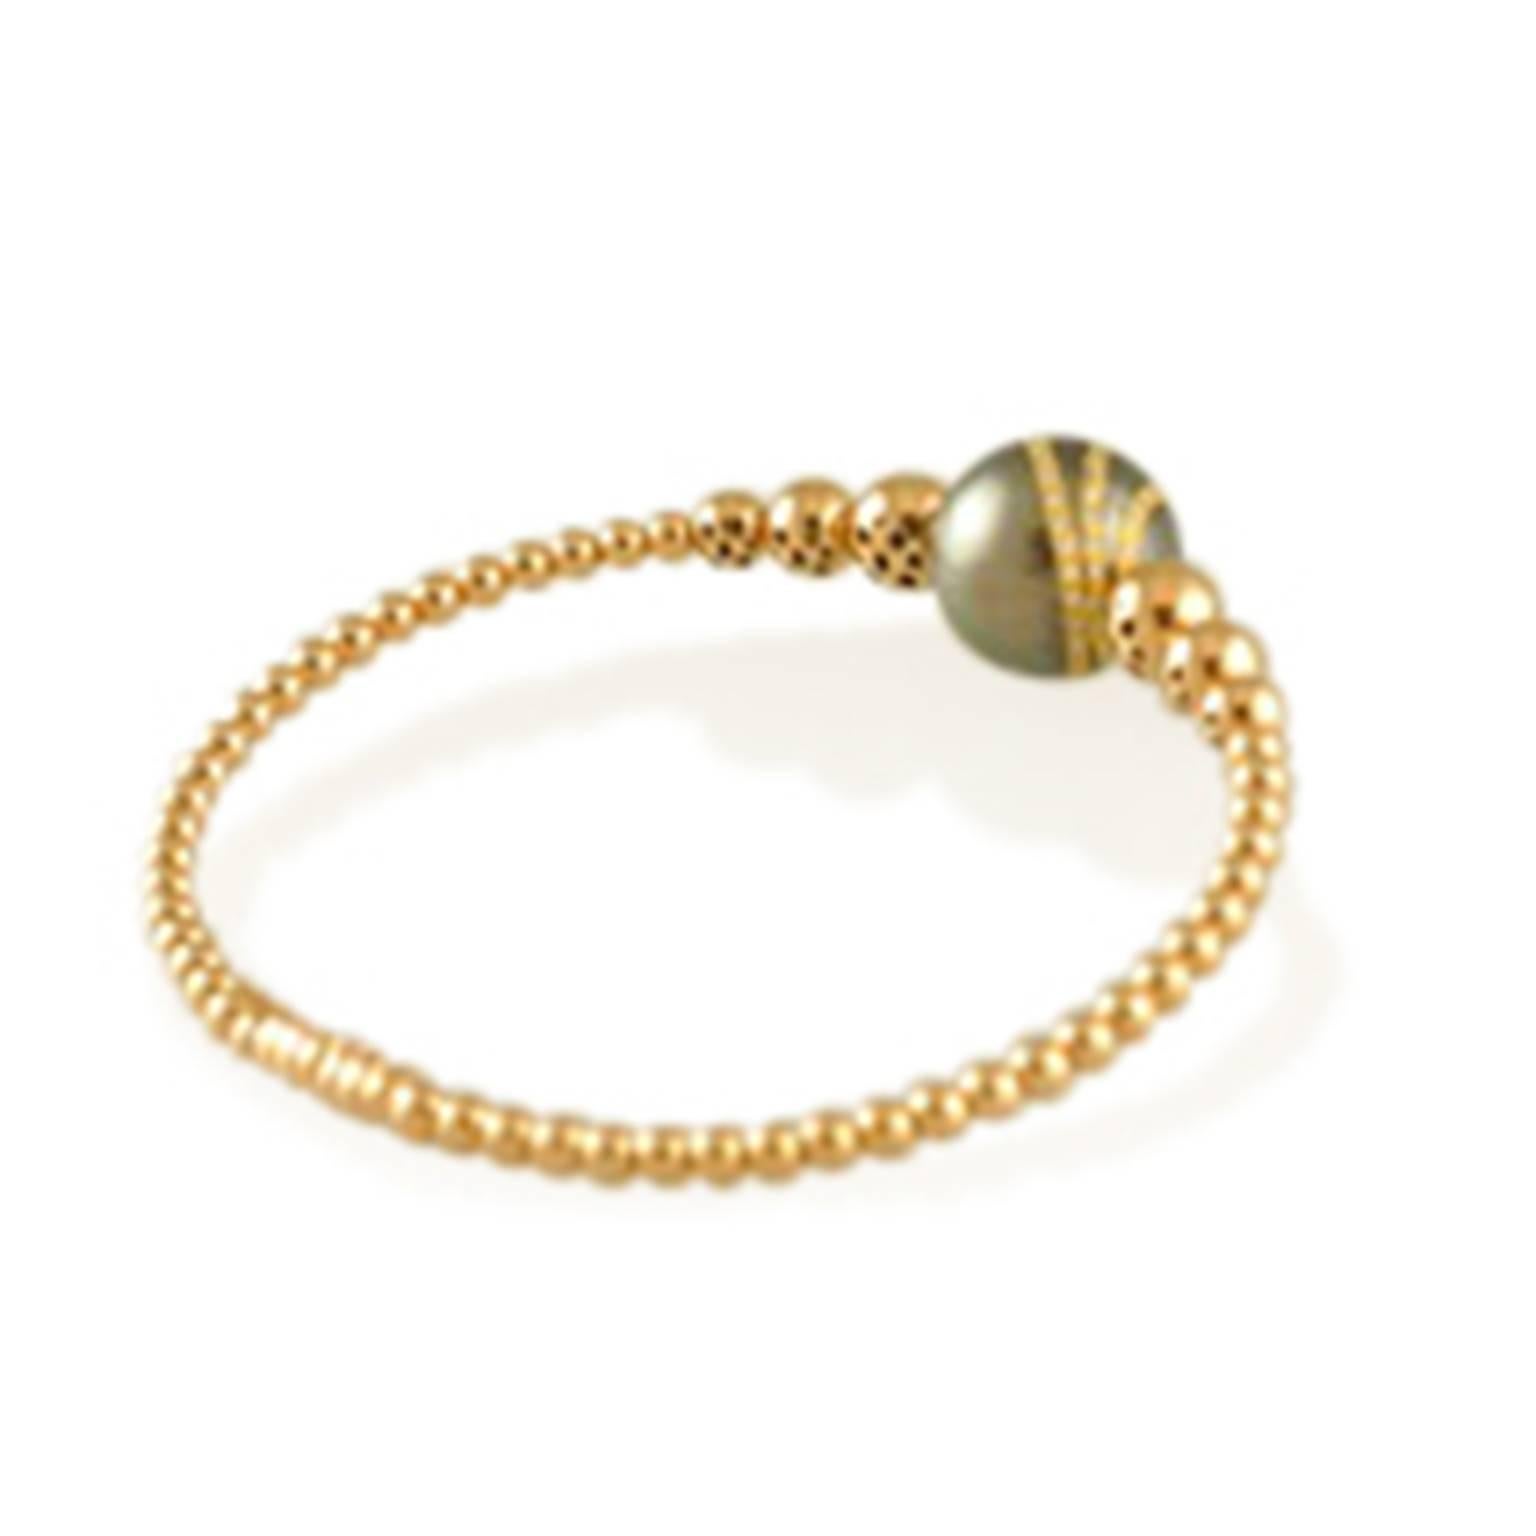 18K Rose Gold 13.5mm Black Tahitian Pearl and full cut diamond bracelet.  .28cts diamonds and This bracelet has .28CTW Diamonds 

Italian Design